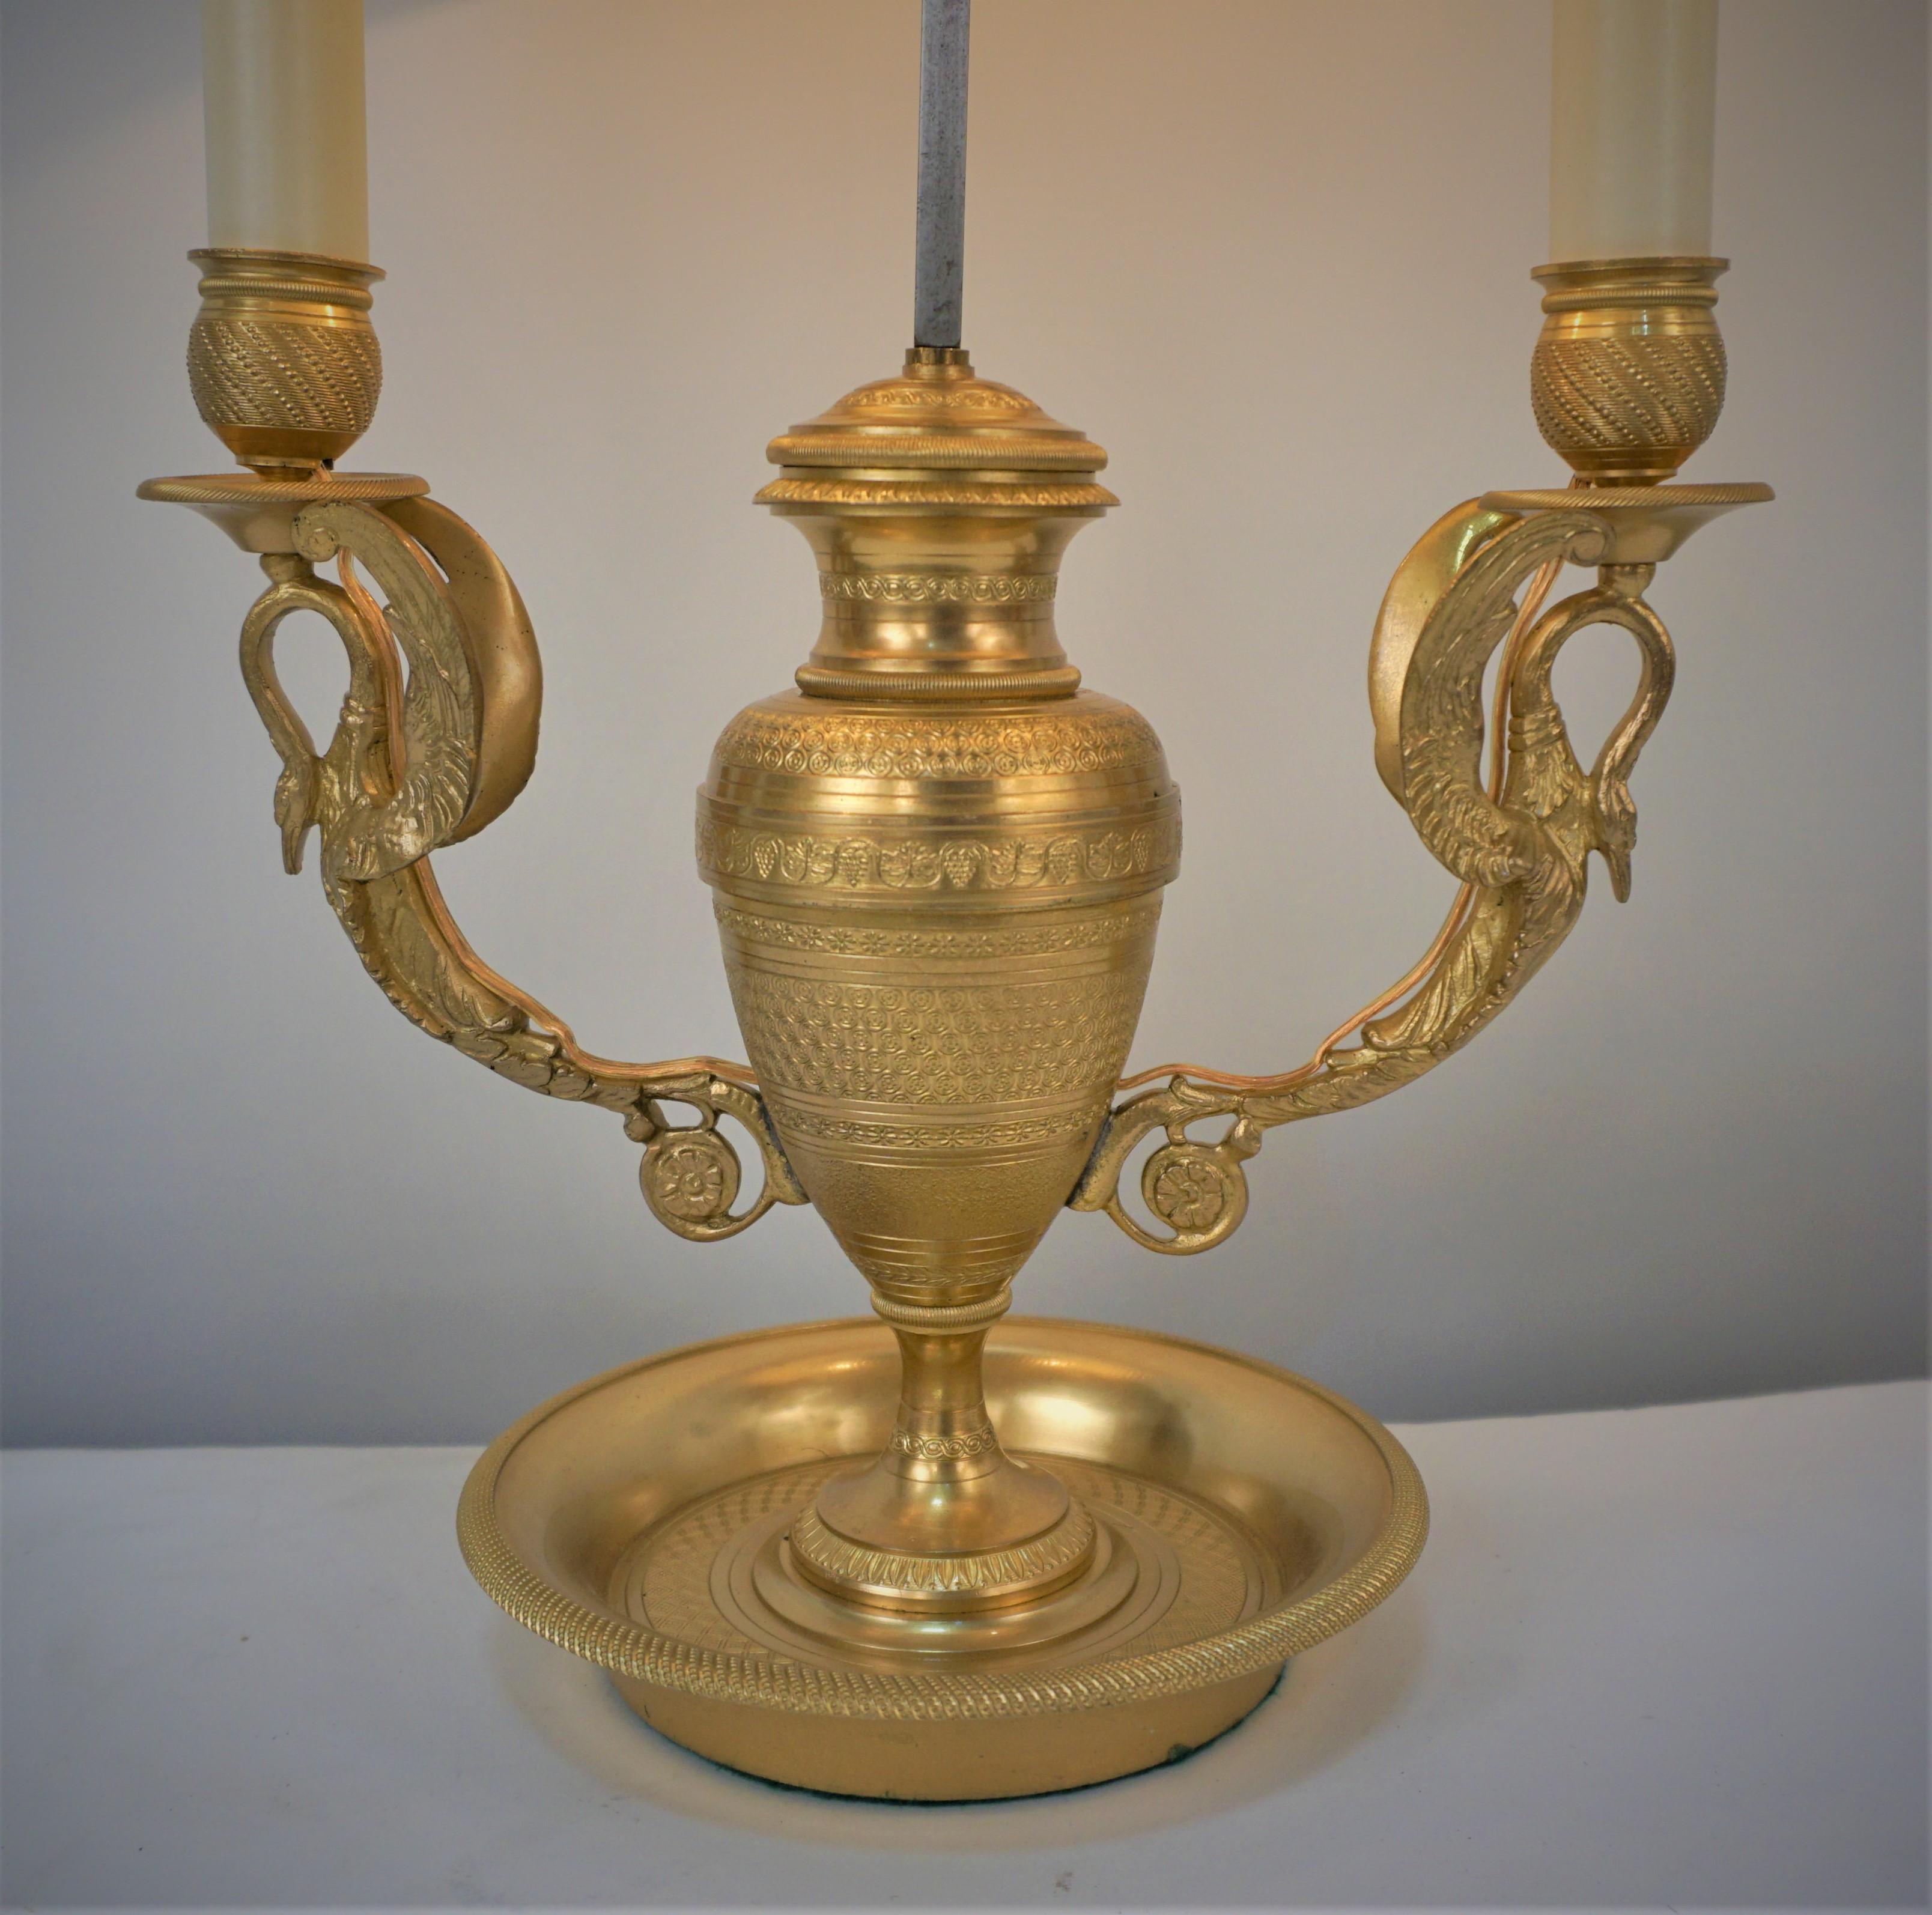 Vergoldete Bronze mit doppelten Schwanenarmen, Bouillotte Tischlampe mit ockerrotem Lampenschirm.